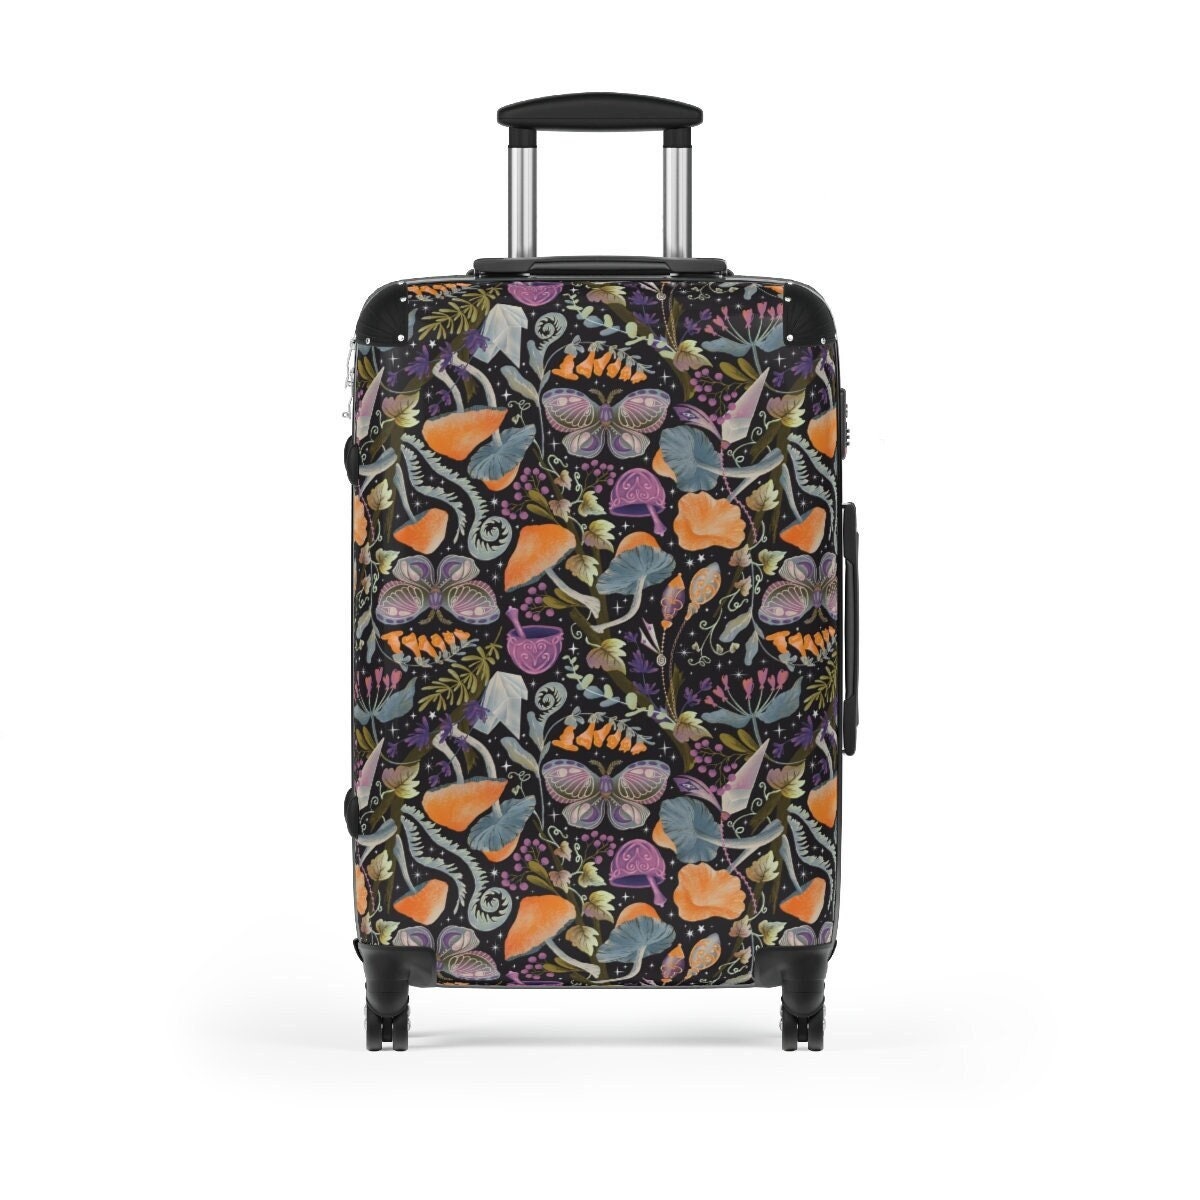 Darjeeling Limited luggage, Moth